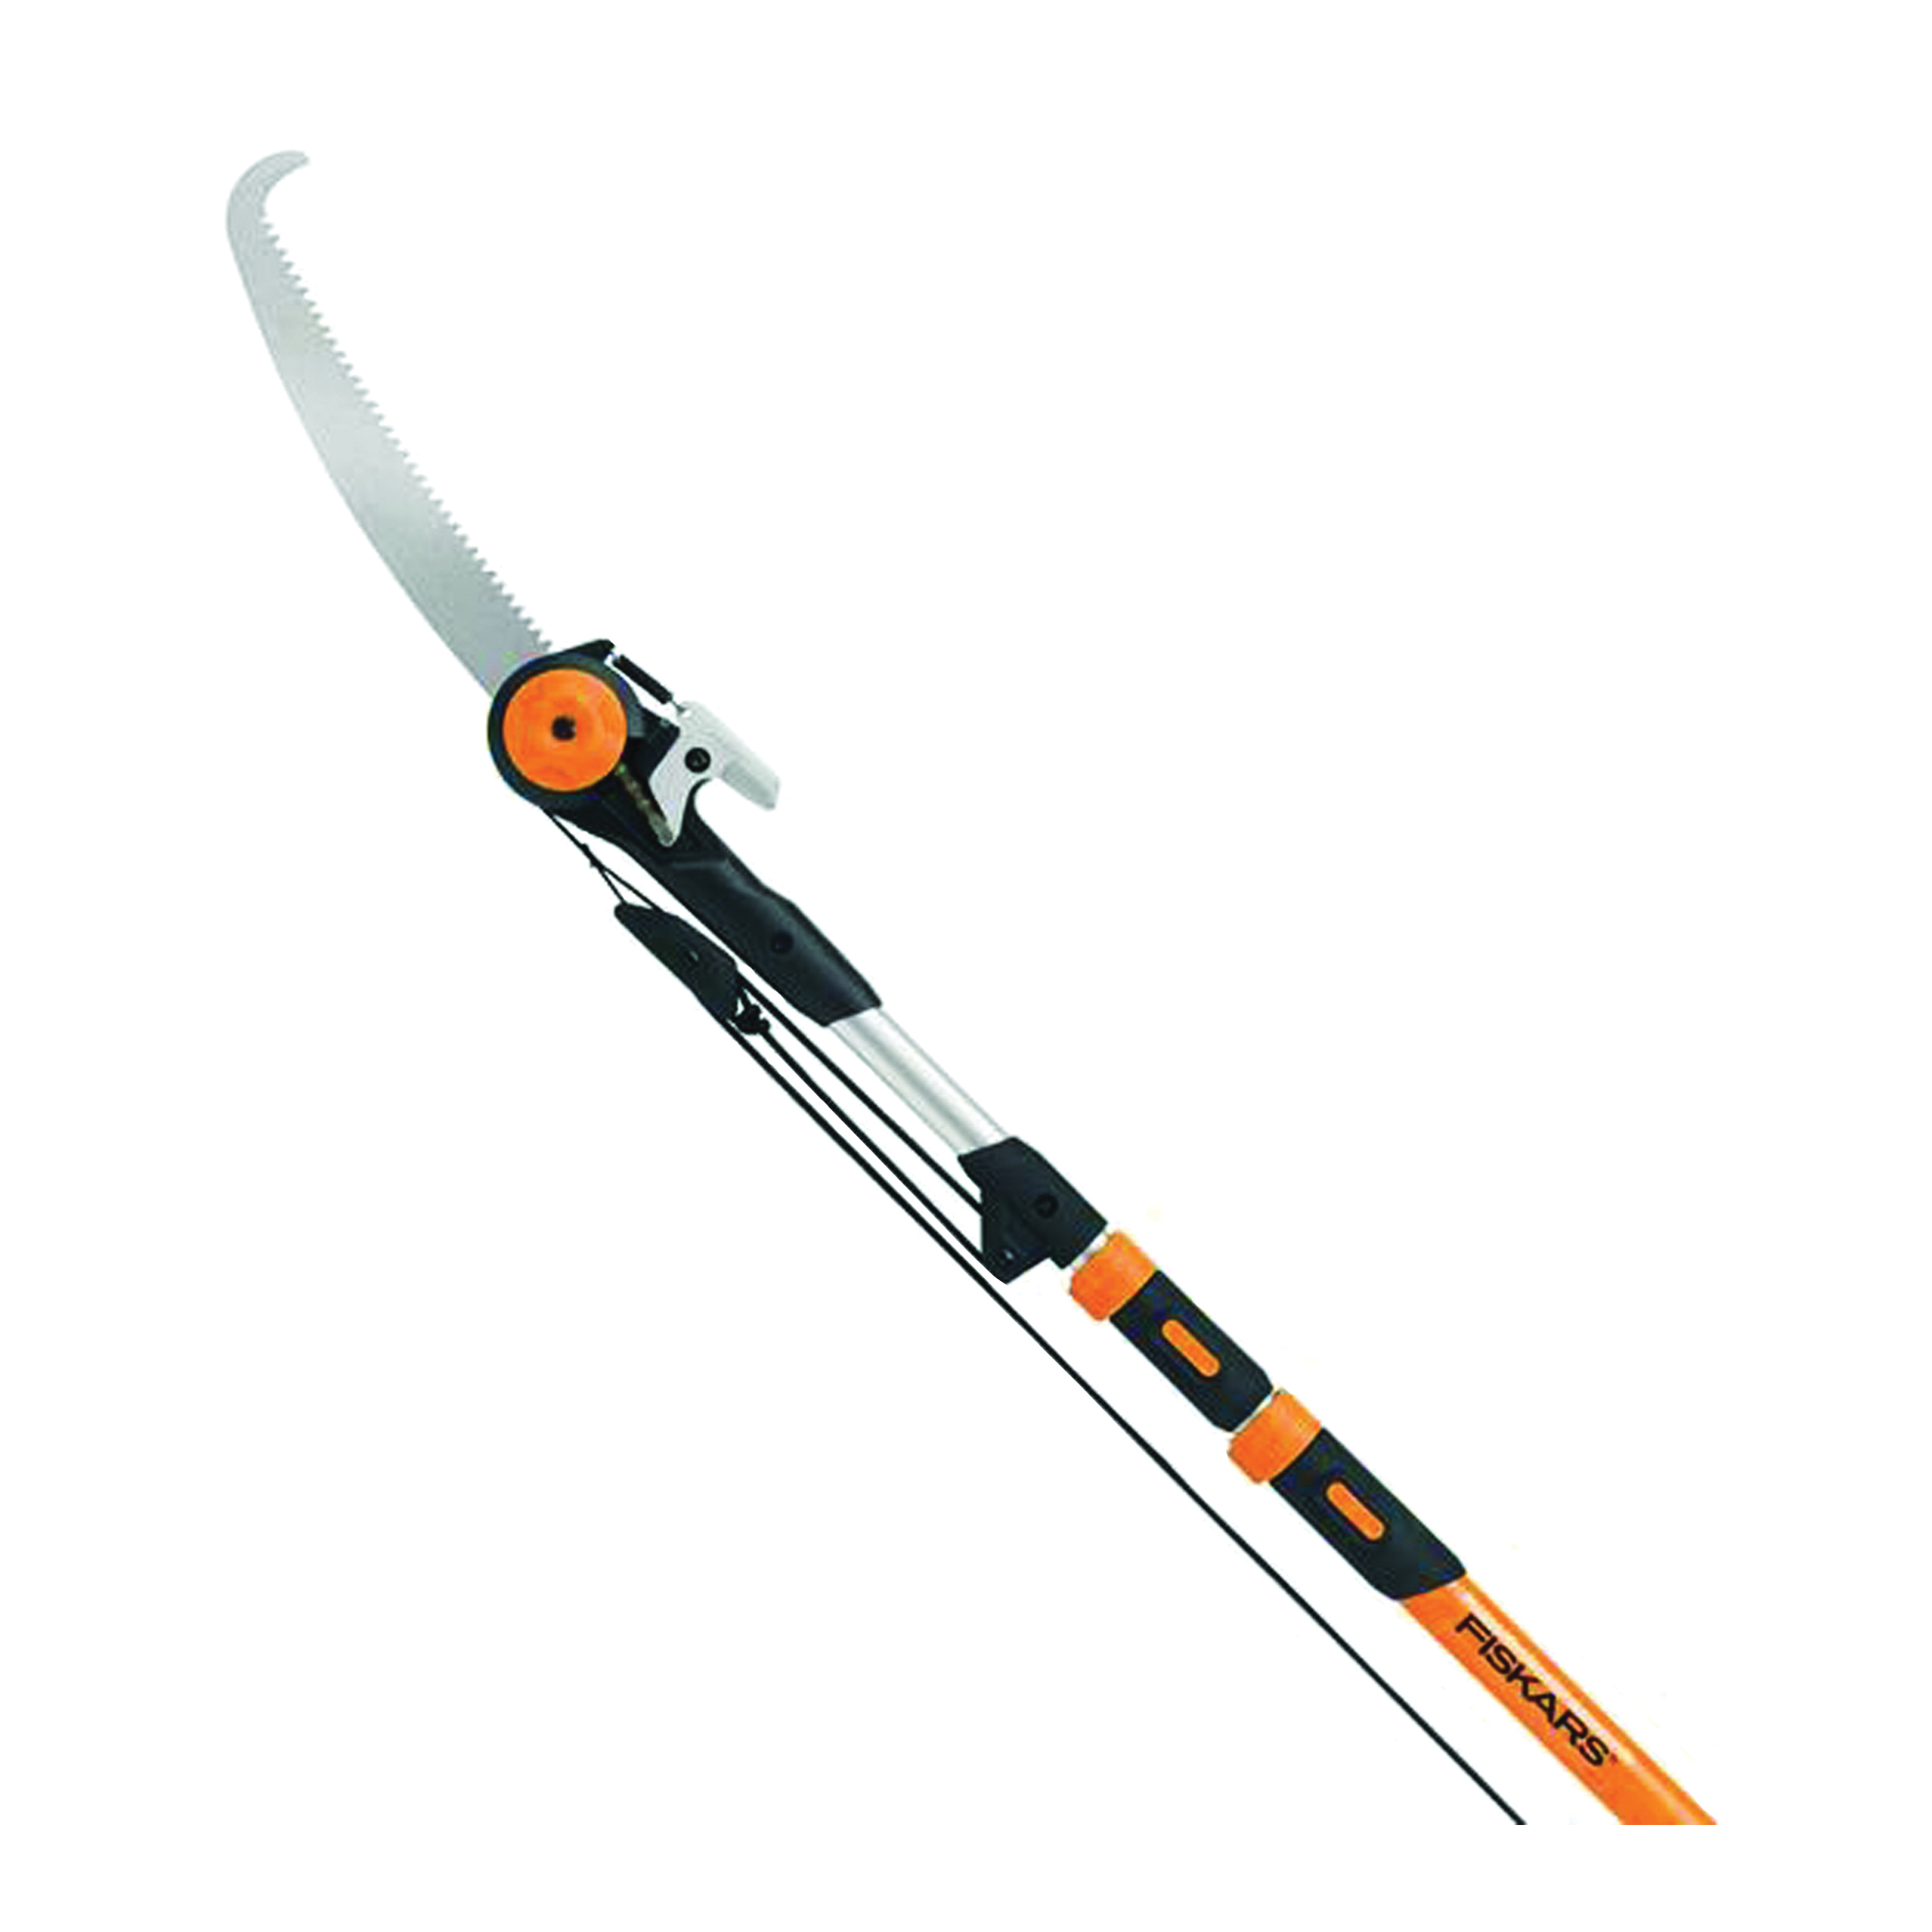 Fiskars 93356920 Pole Pruner Blade